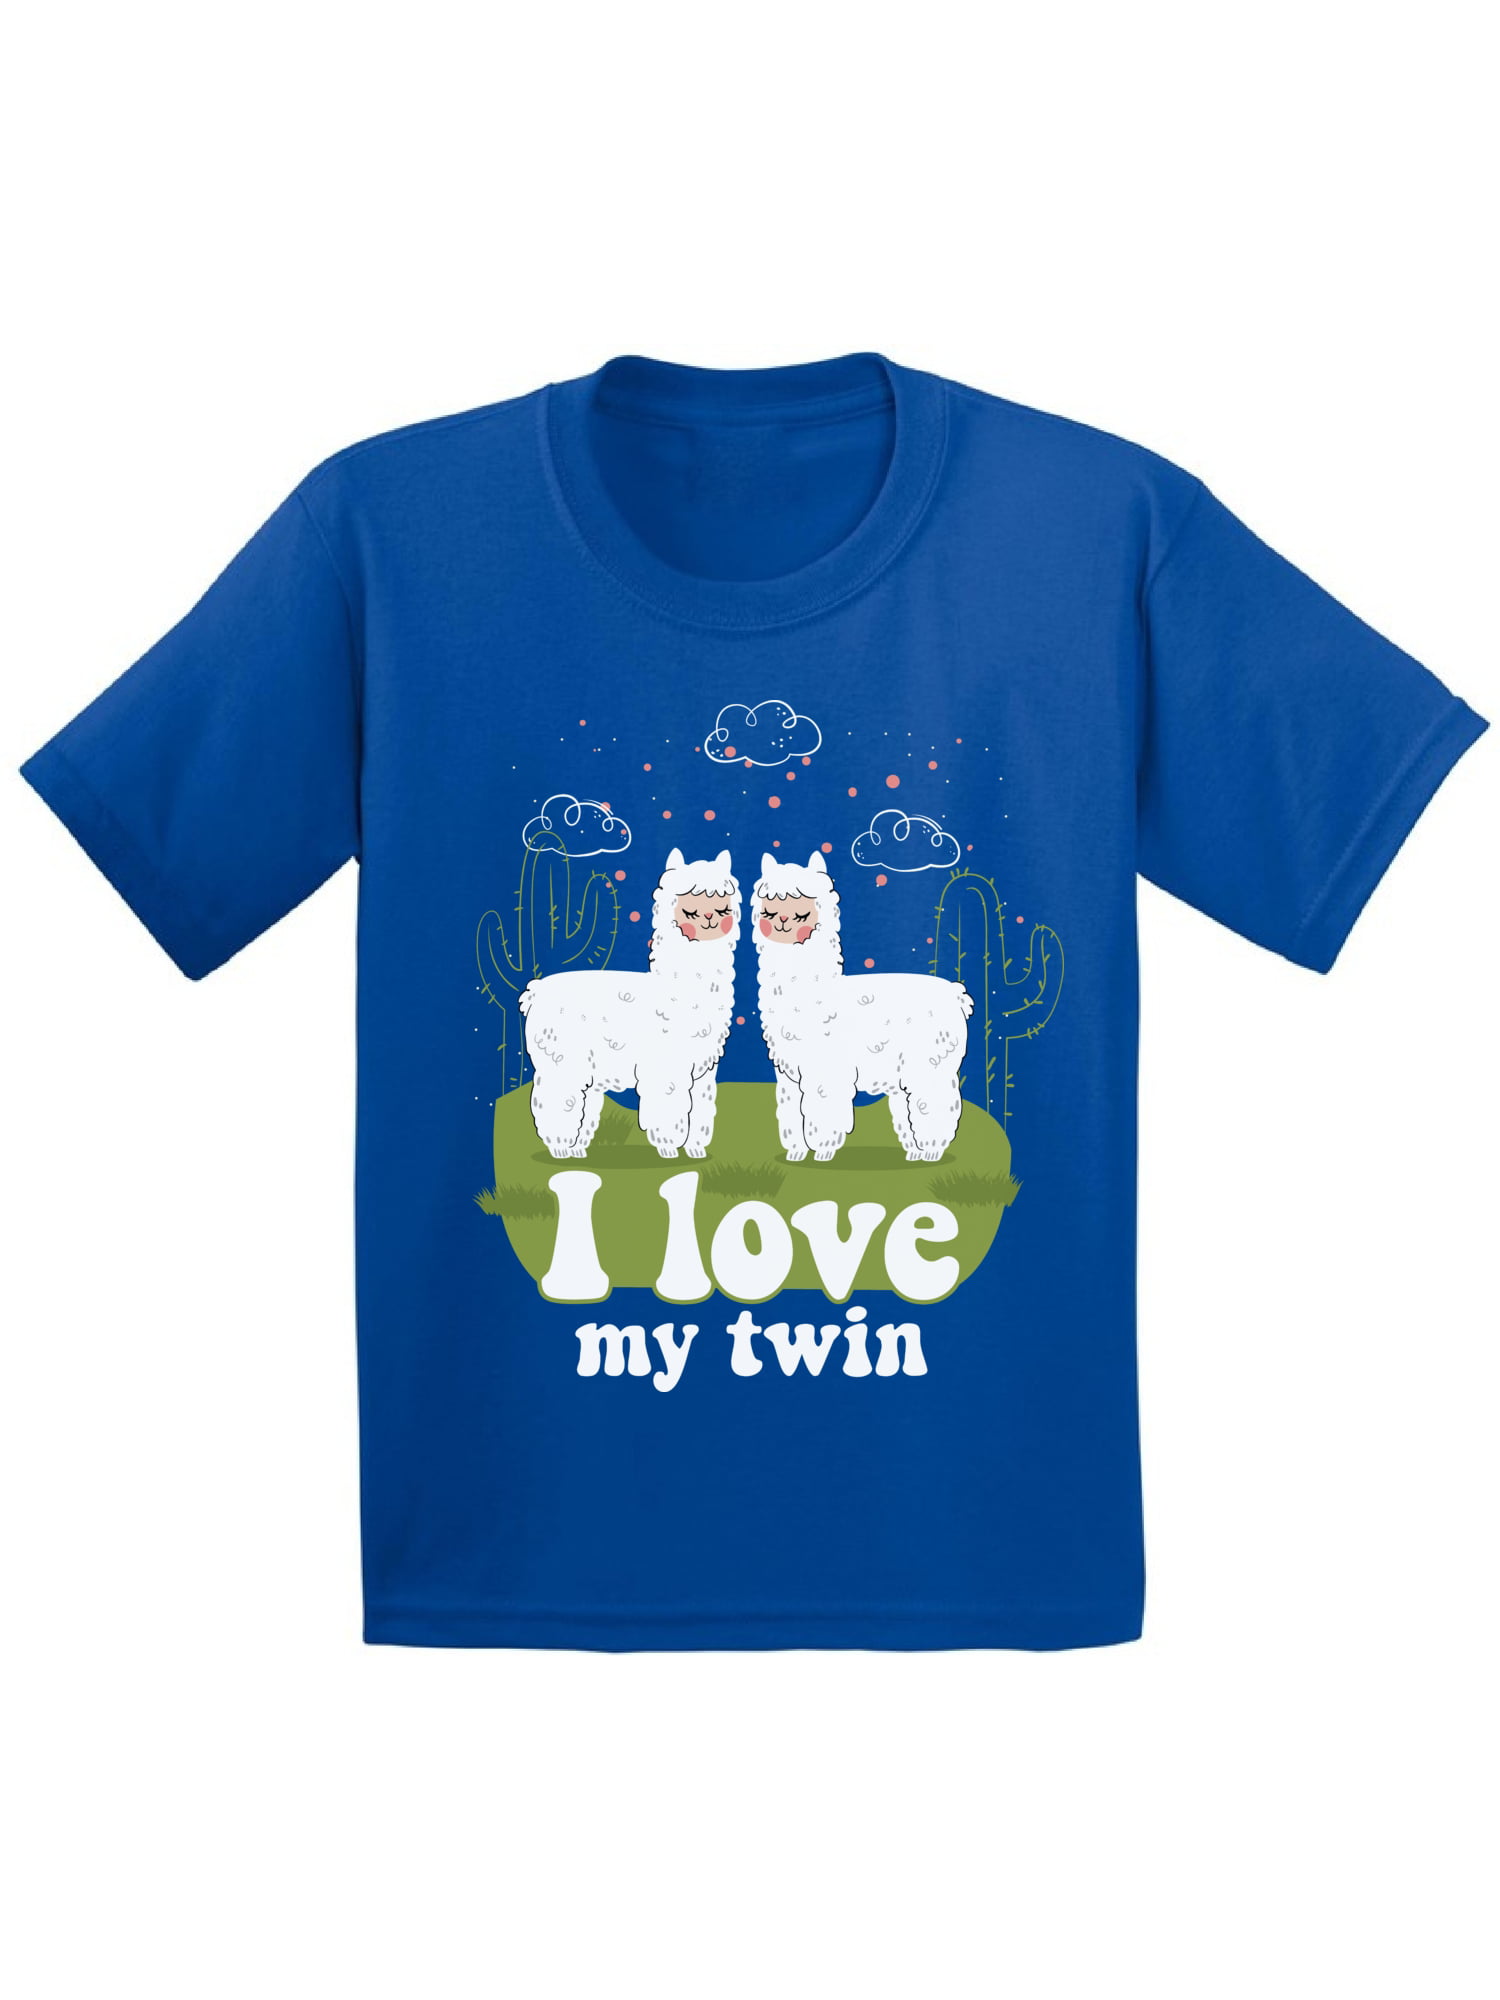 twin birthday shirts